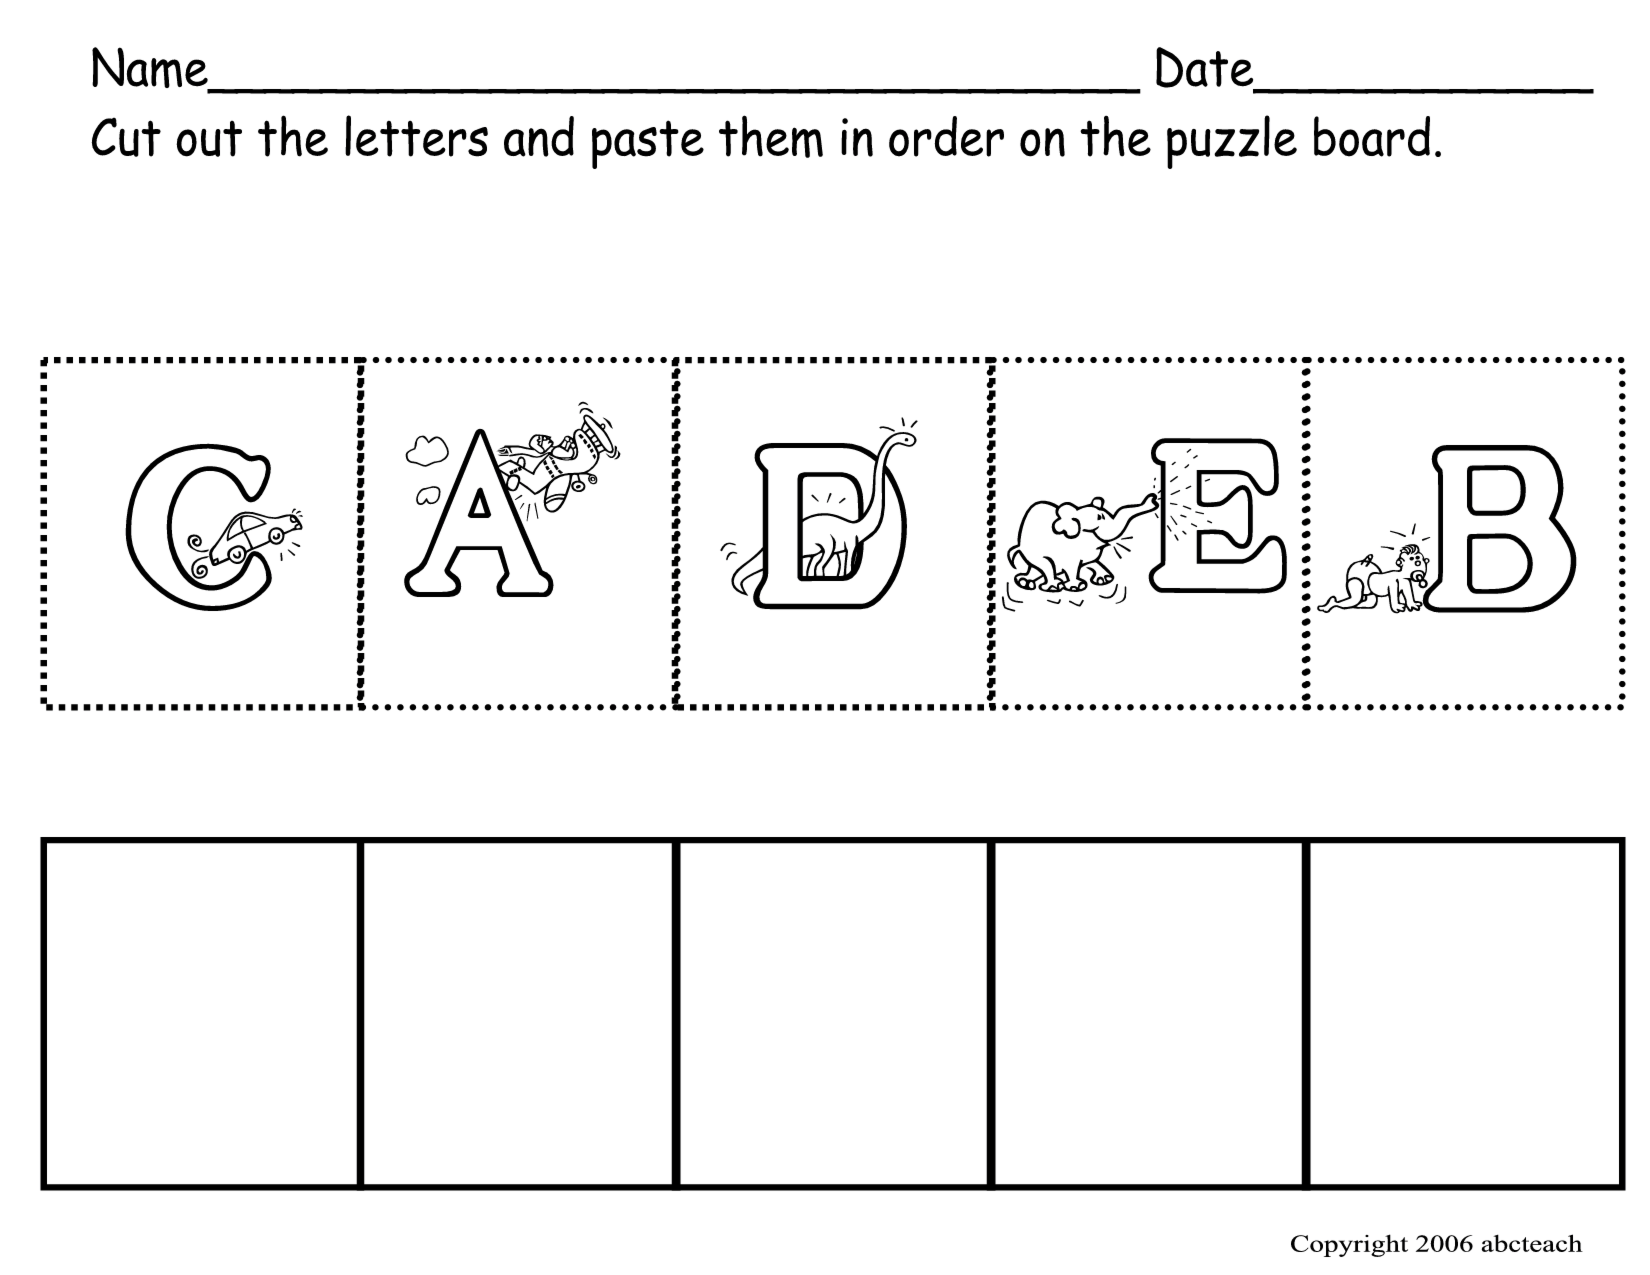 Preschool Abc Worksheets Printables In 2020 | Abc Worksheets for Alphabet Worksheets For Preschool Pdf